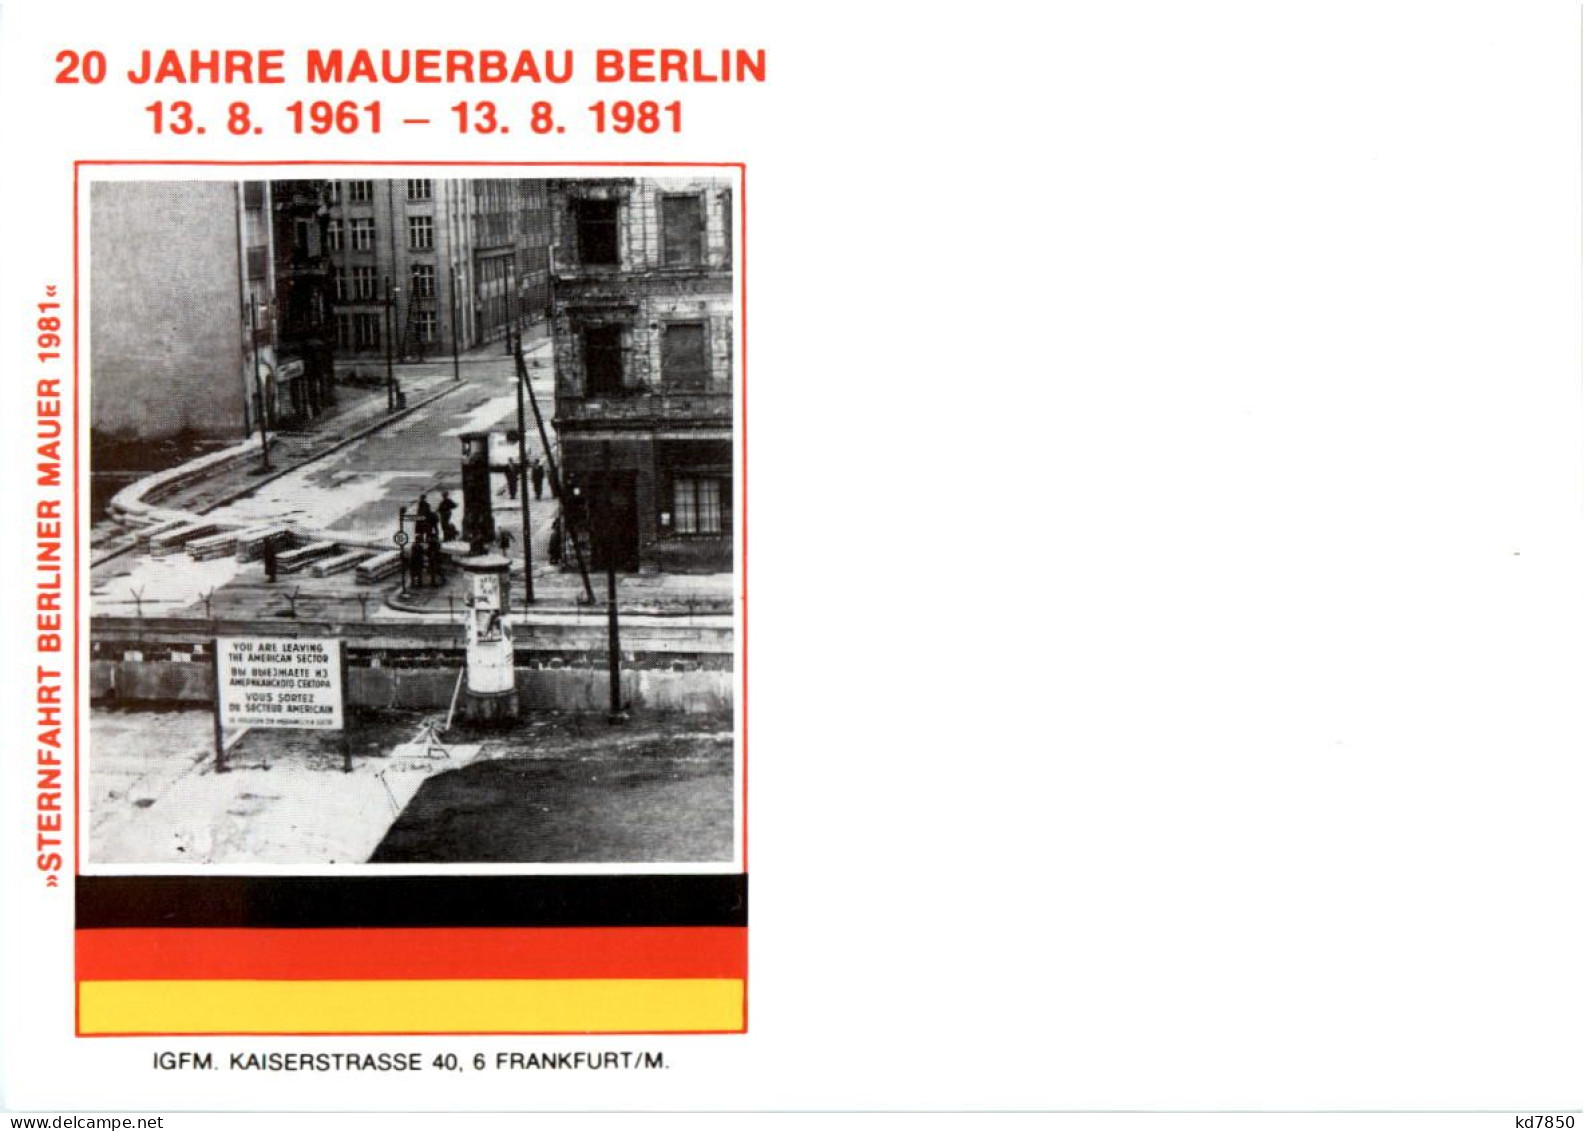 20 Jahre Meuerbau Berlin - Berlin Wall